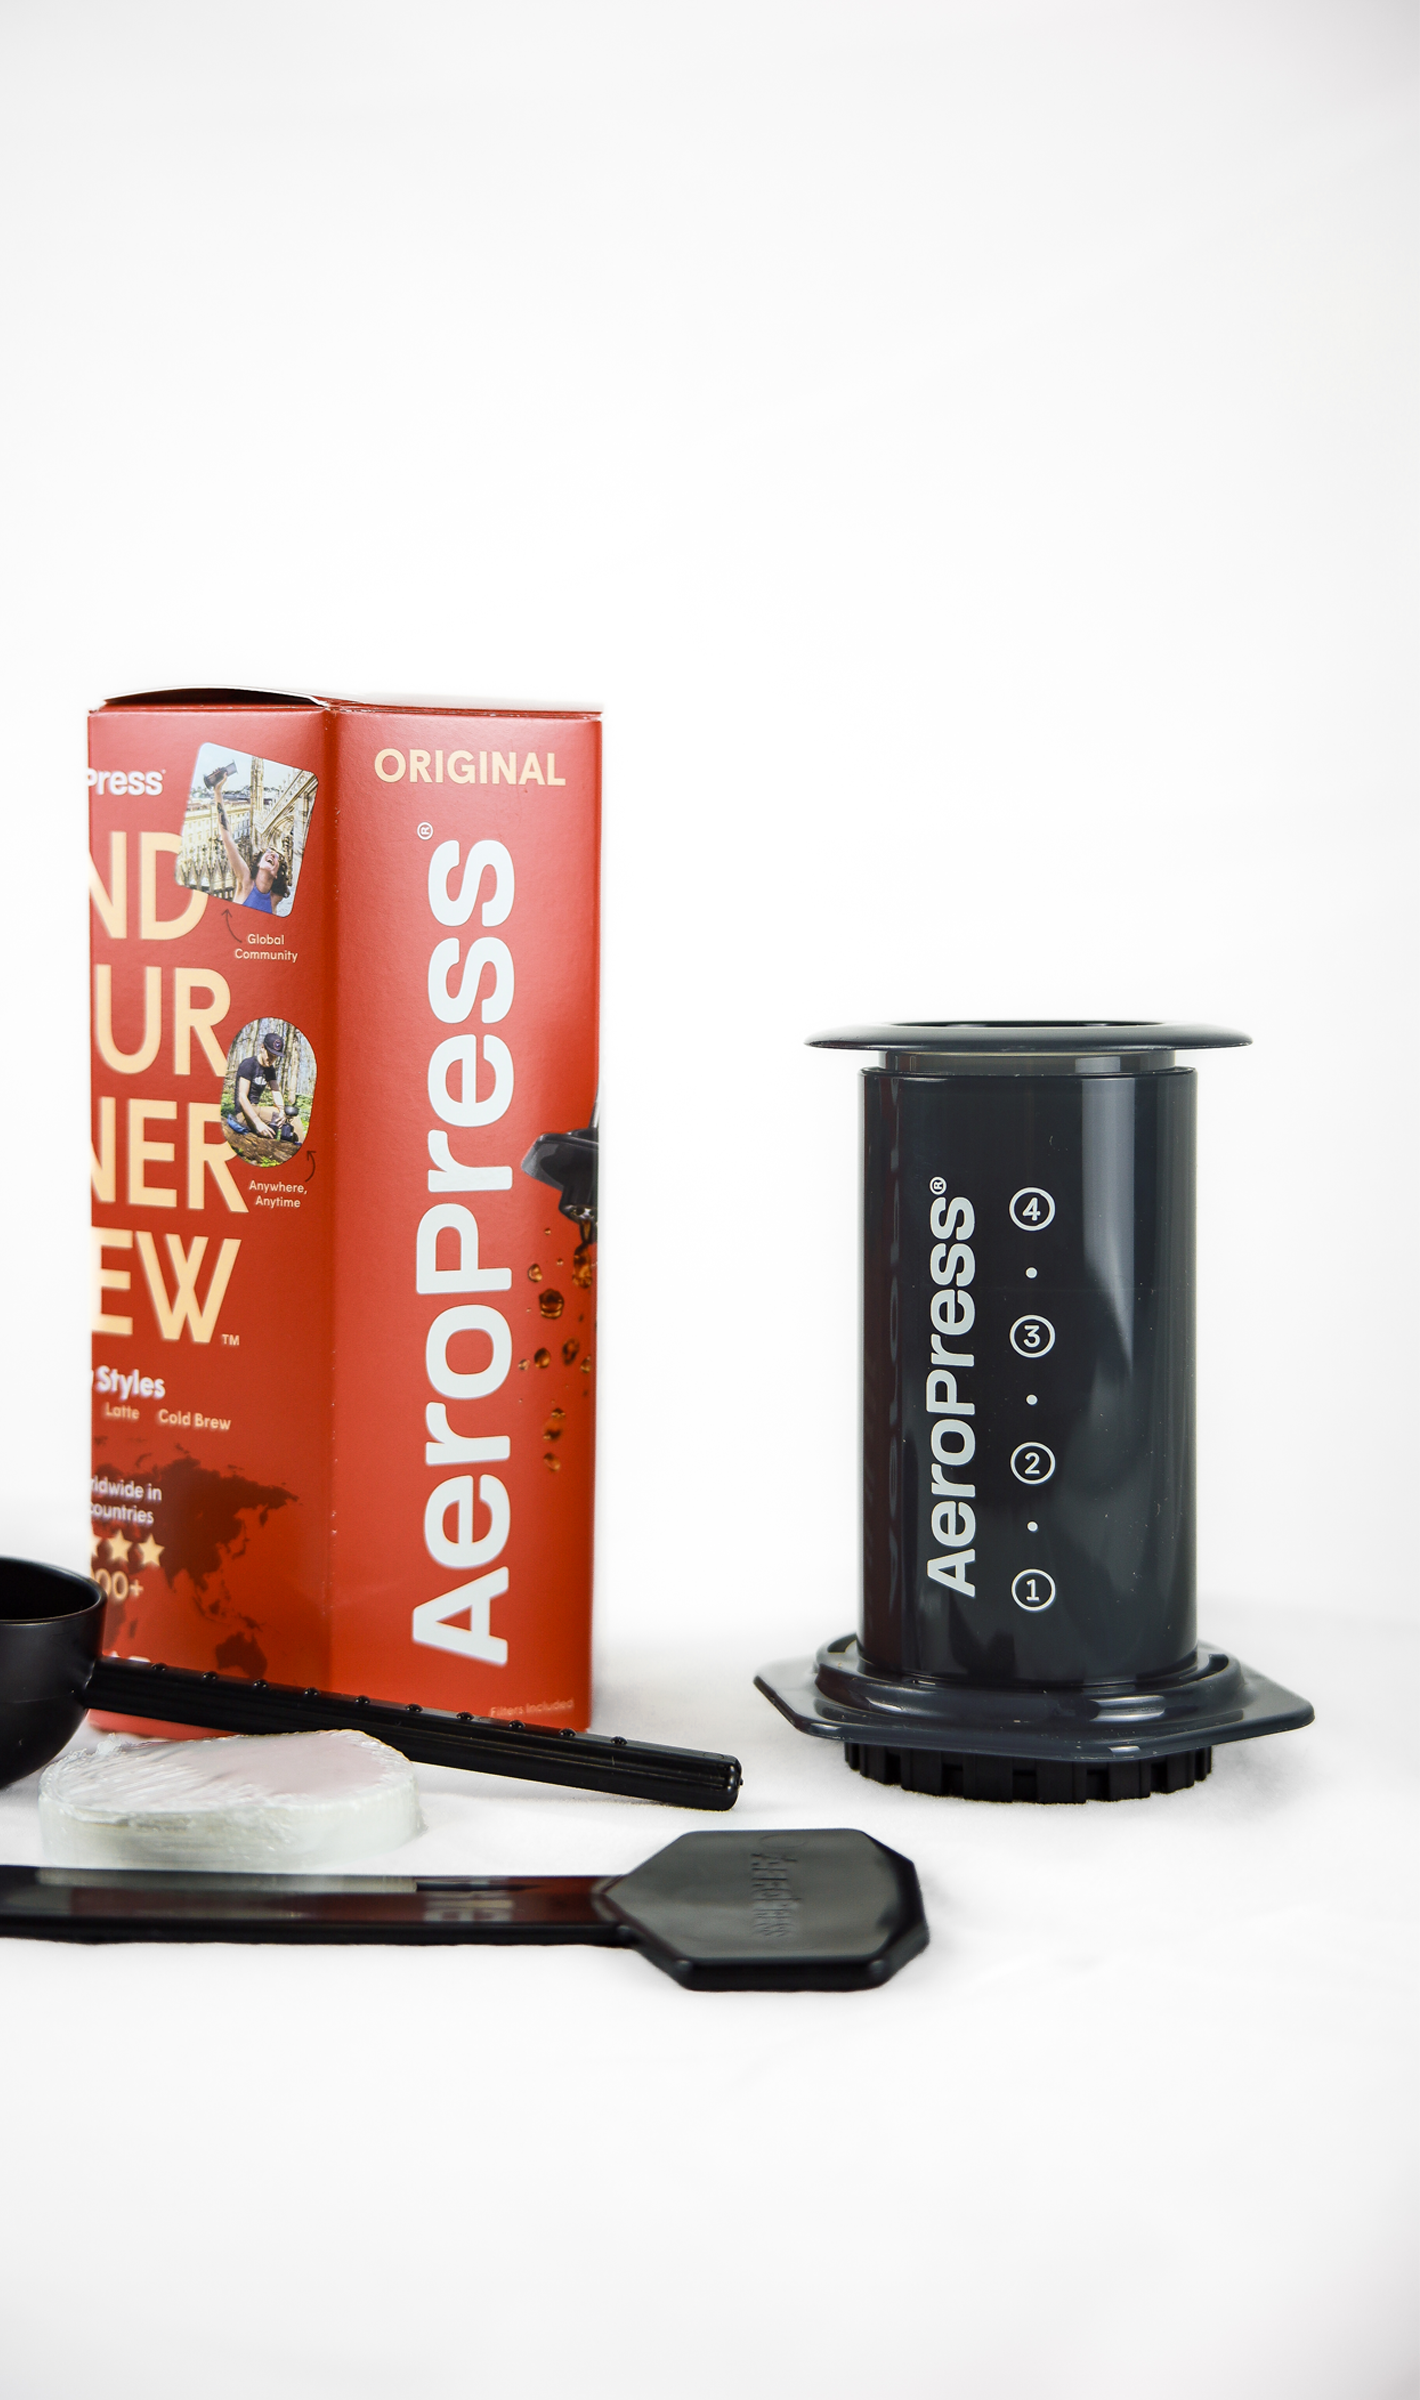 Aeropress - The Best Travel Coffee Maker